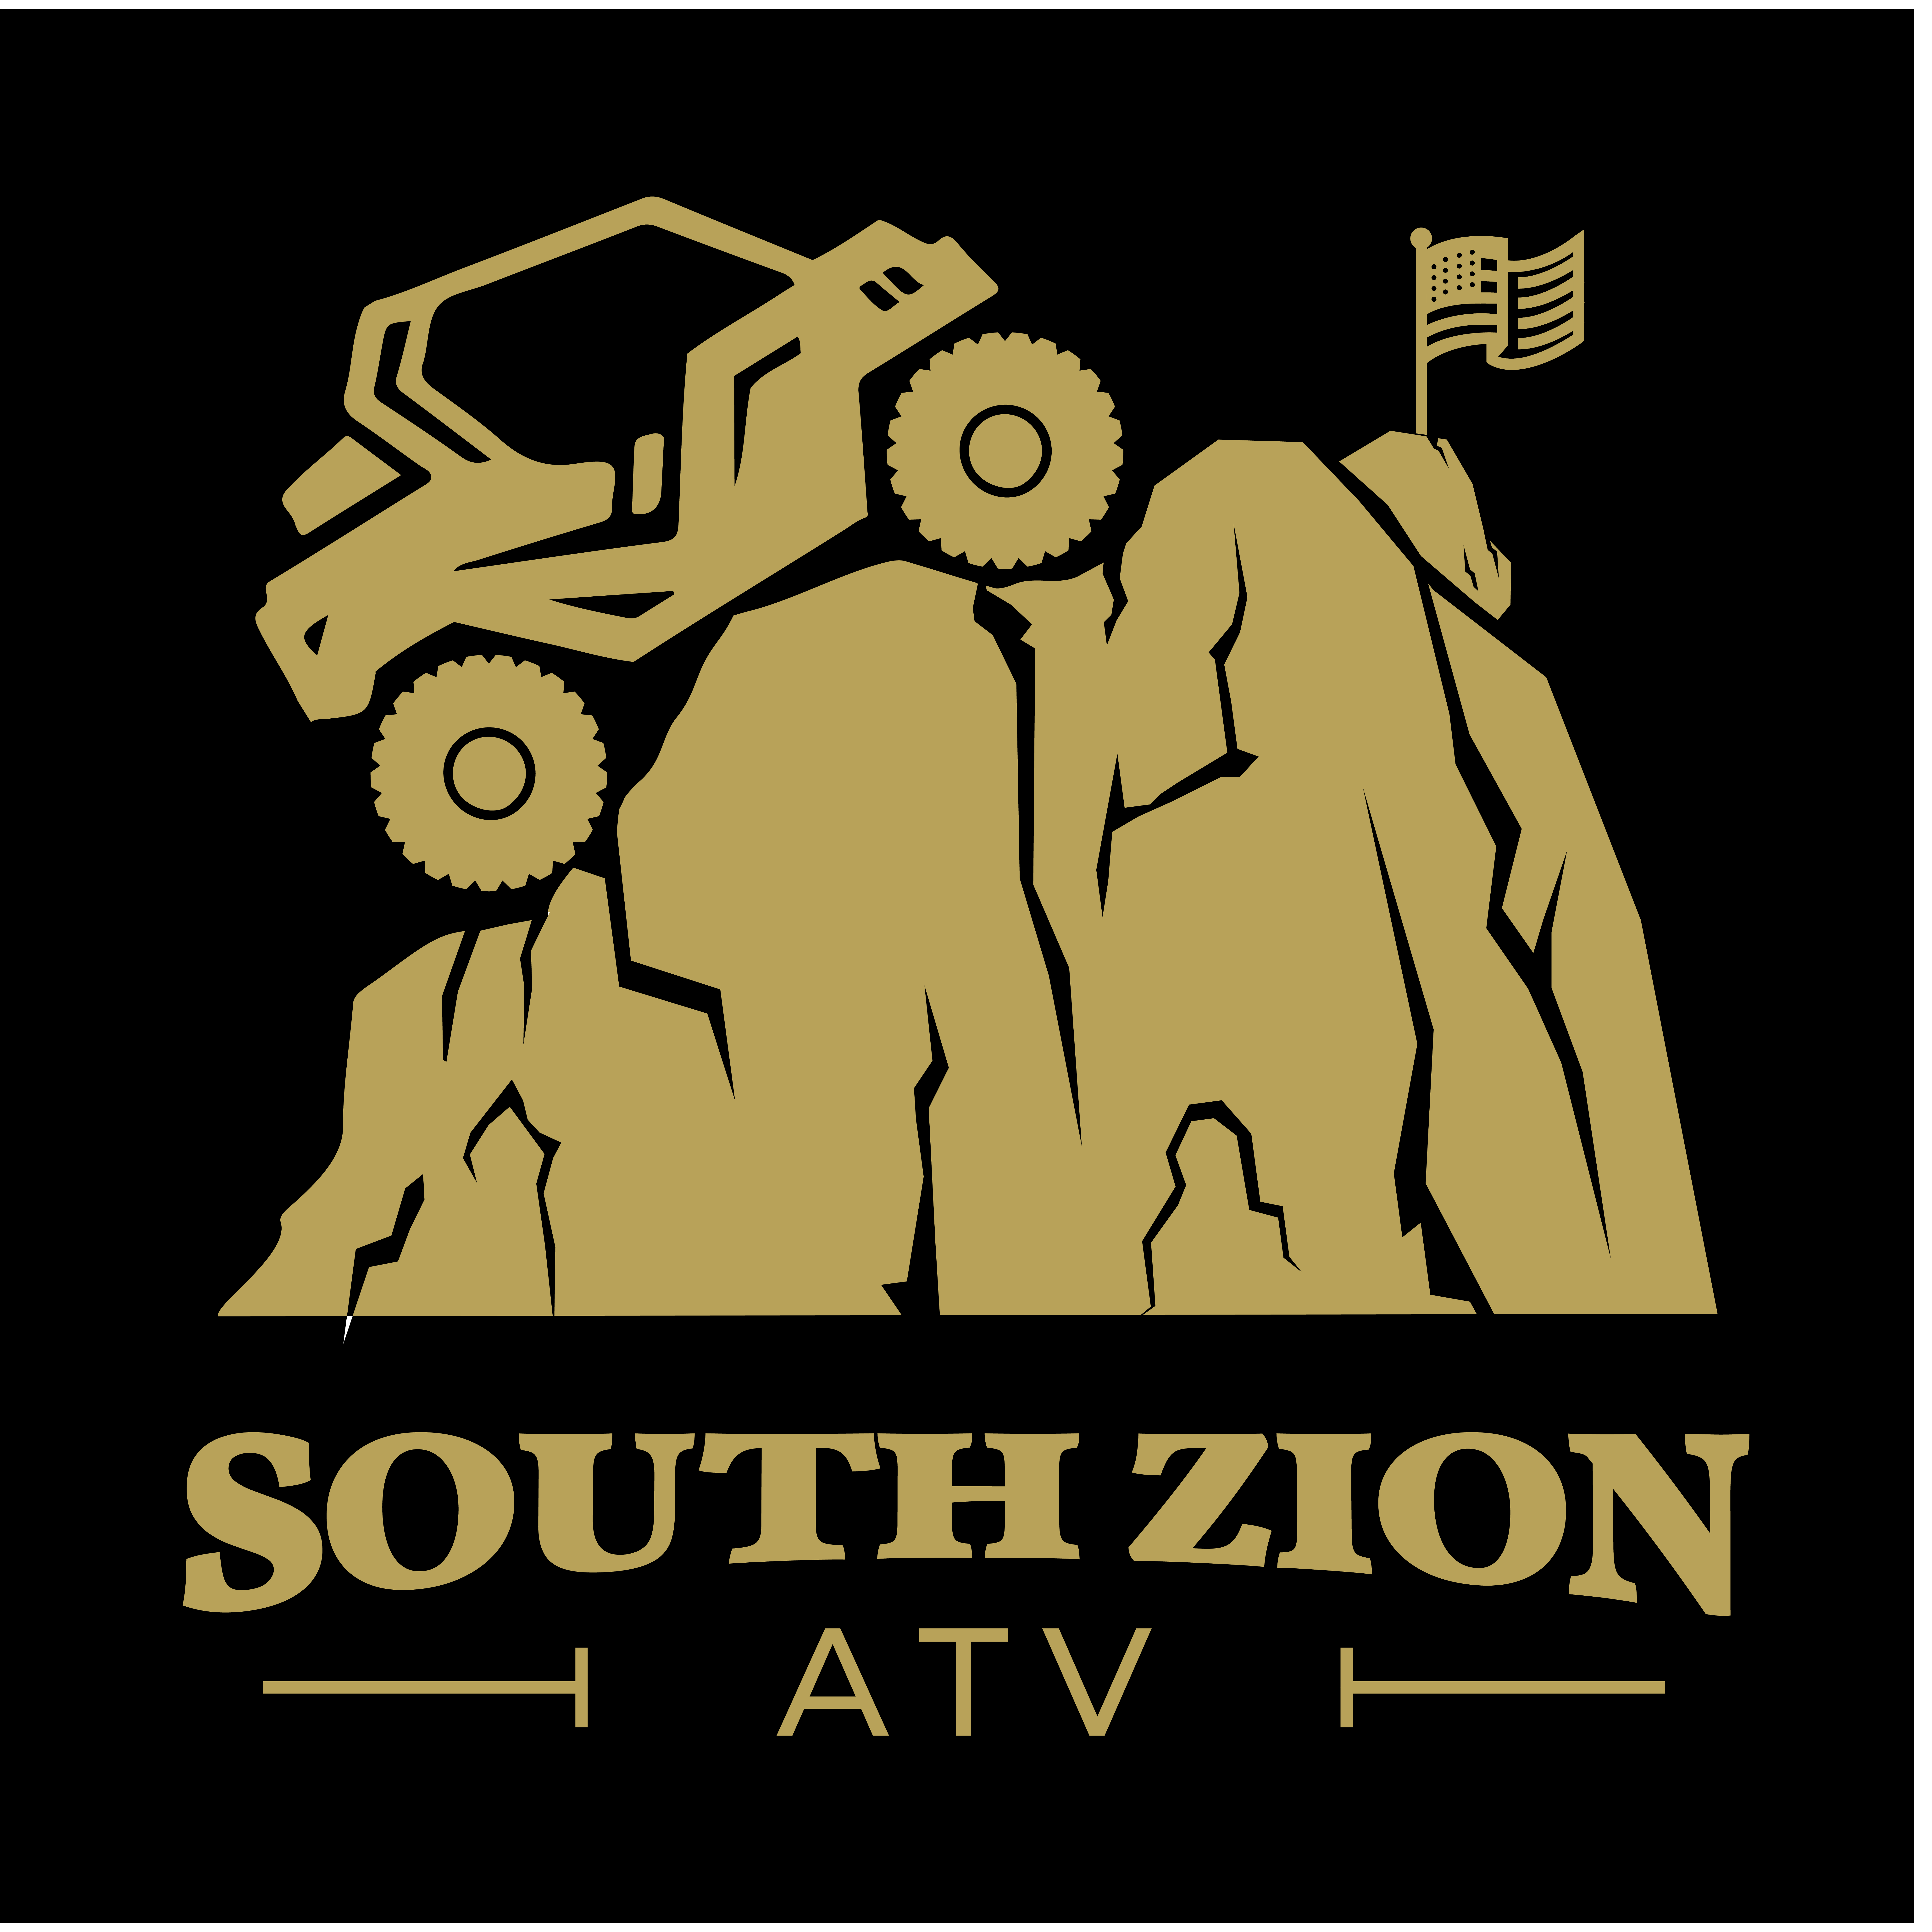 South Zion ATV logo